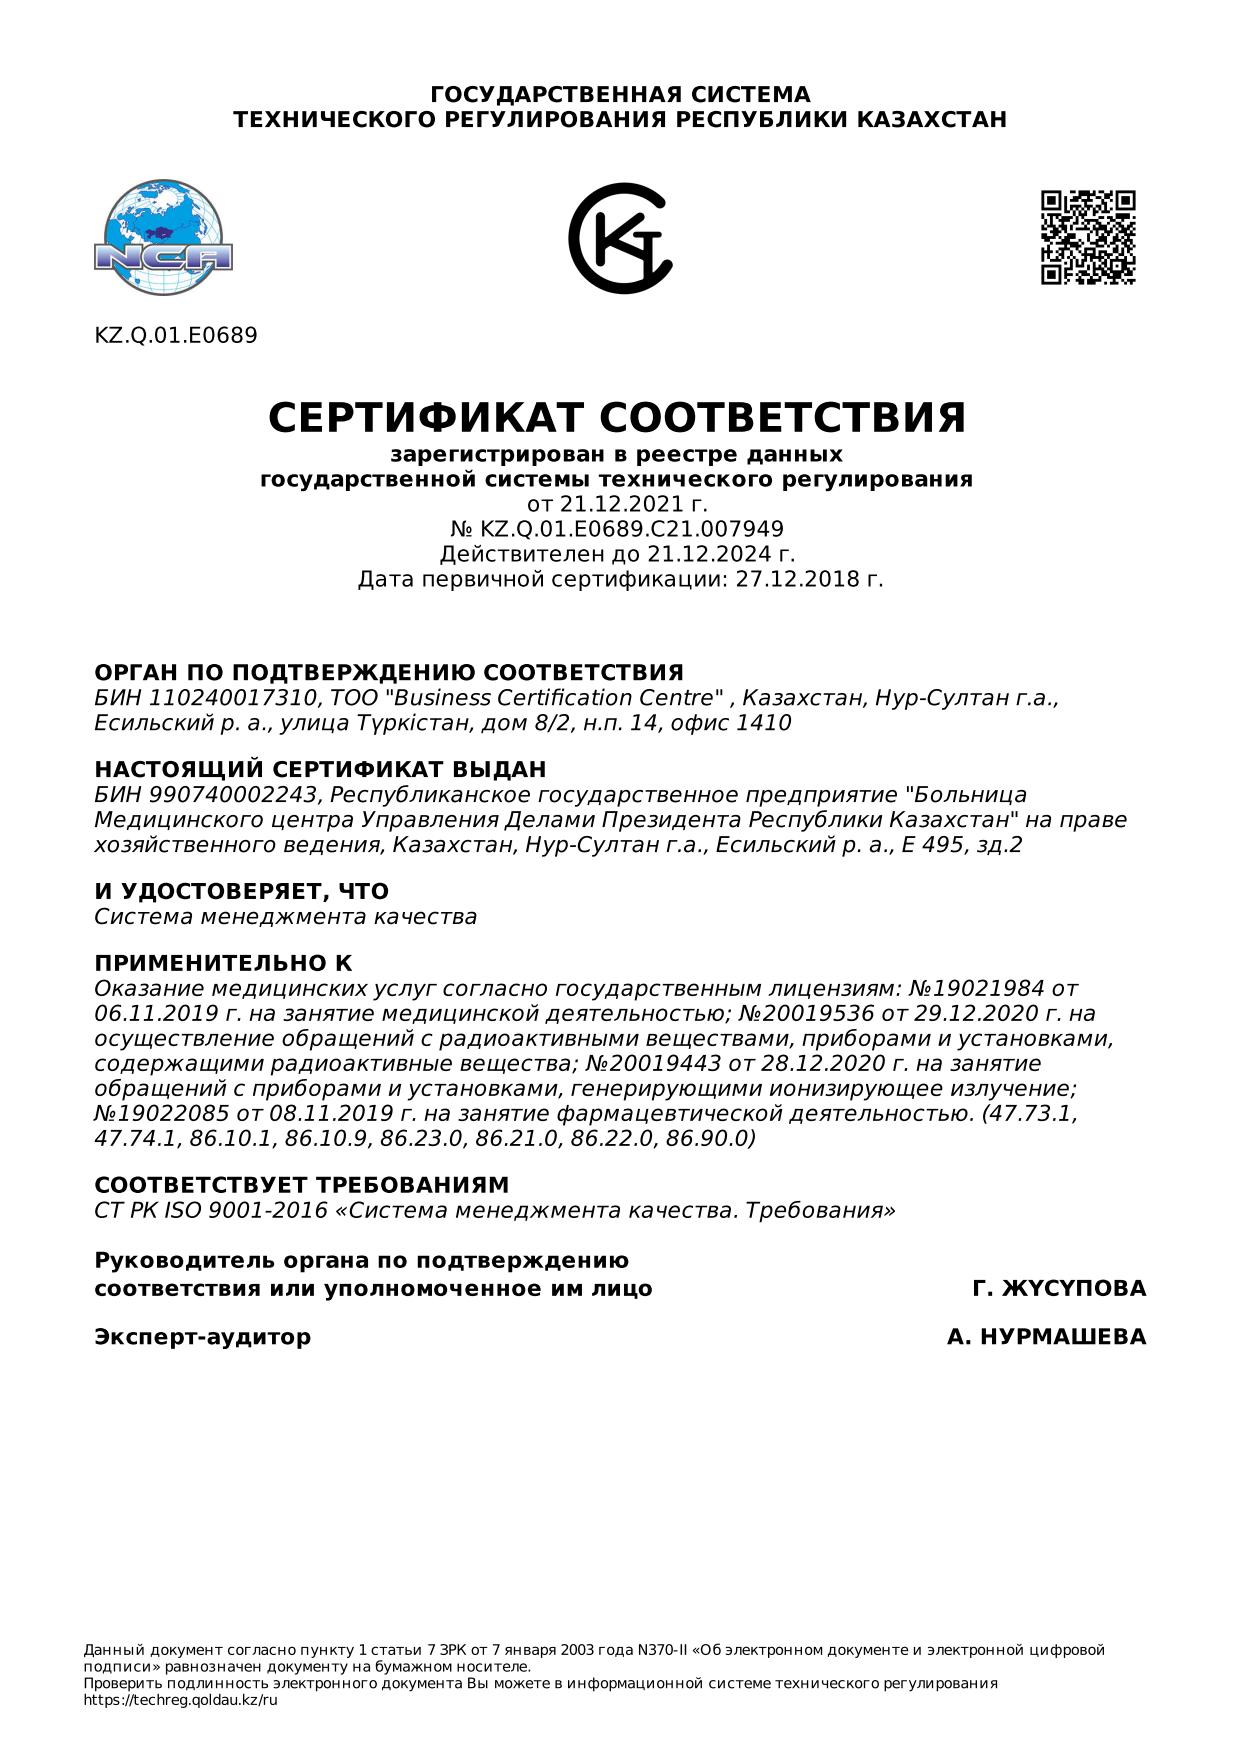 Сертификат соответствия СТ РК ISO 9001-2016 СМК БМЦ УДП РК 2021_1